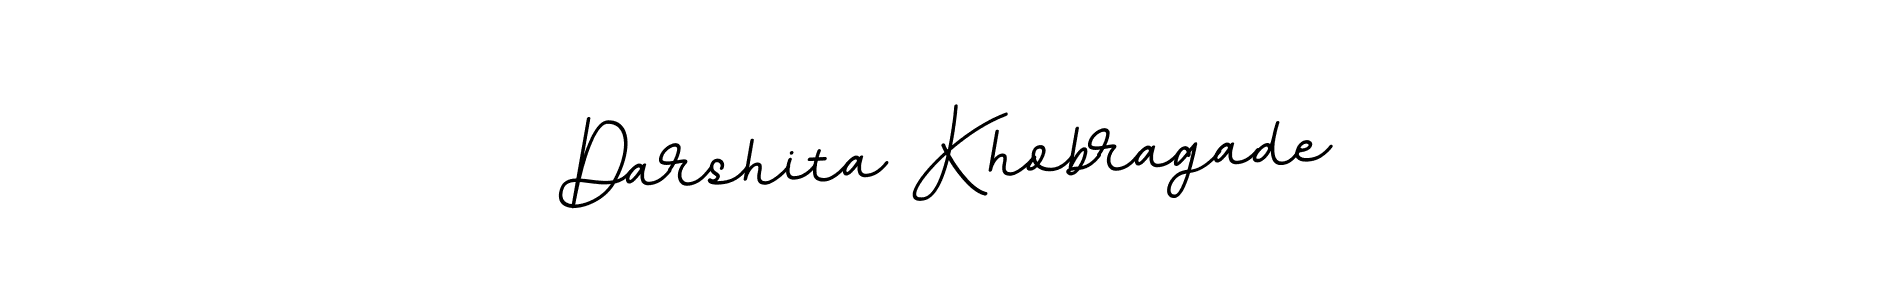 How to Draw Darshita Khobragade signature style? BallpointsItalic-DORy9 is a latest design signature styles for name Darshita Khobragade. Darshita Khobragade signature style 11 images and pictures png